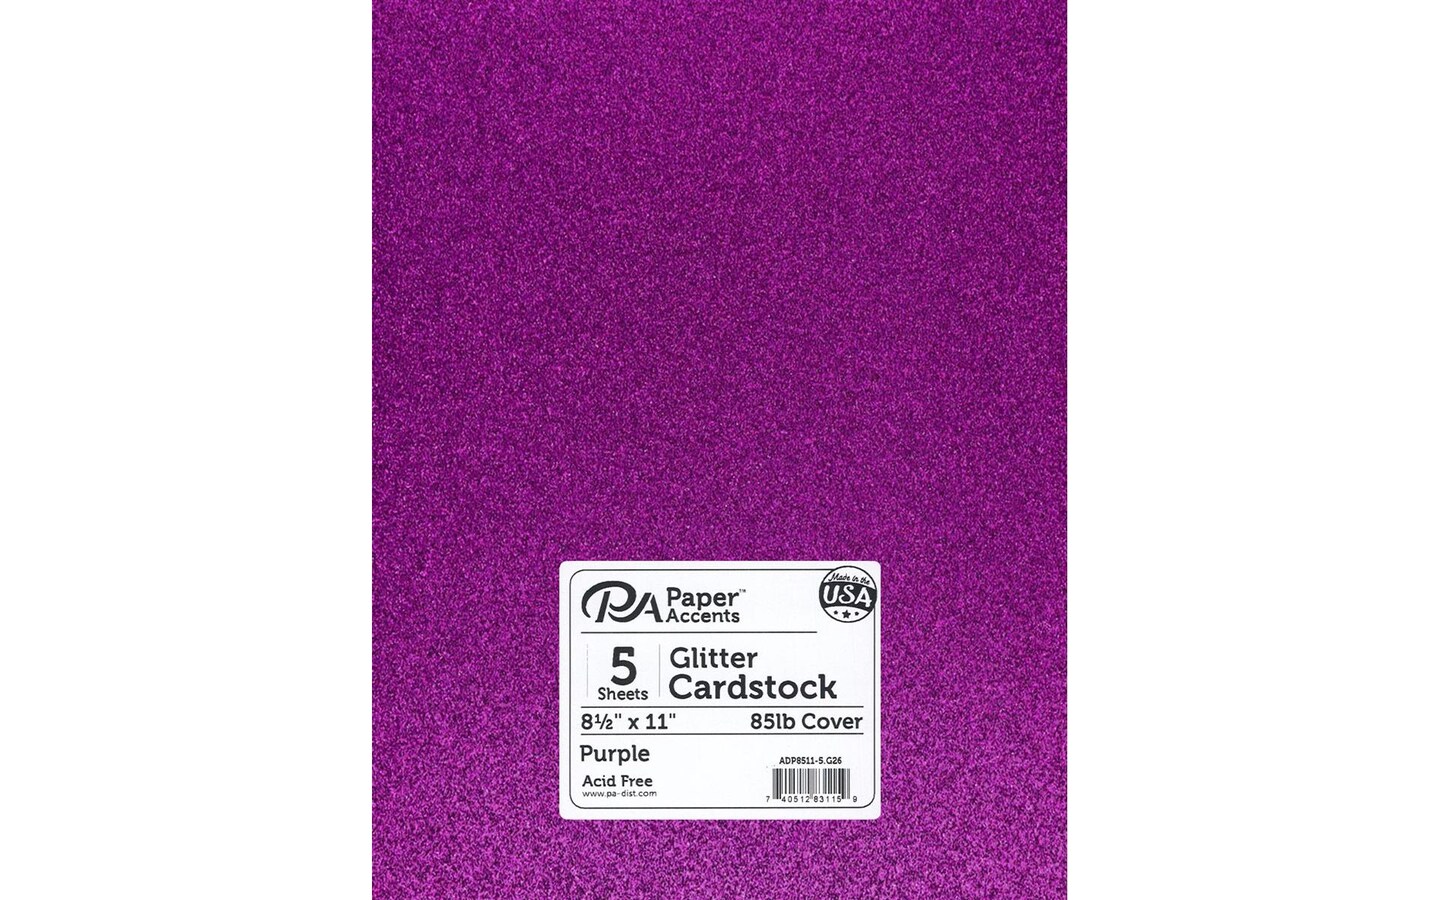 8.5 x 11 Card Stock - Fine Cardstock